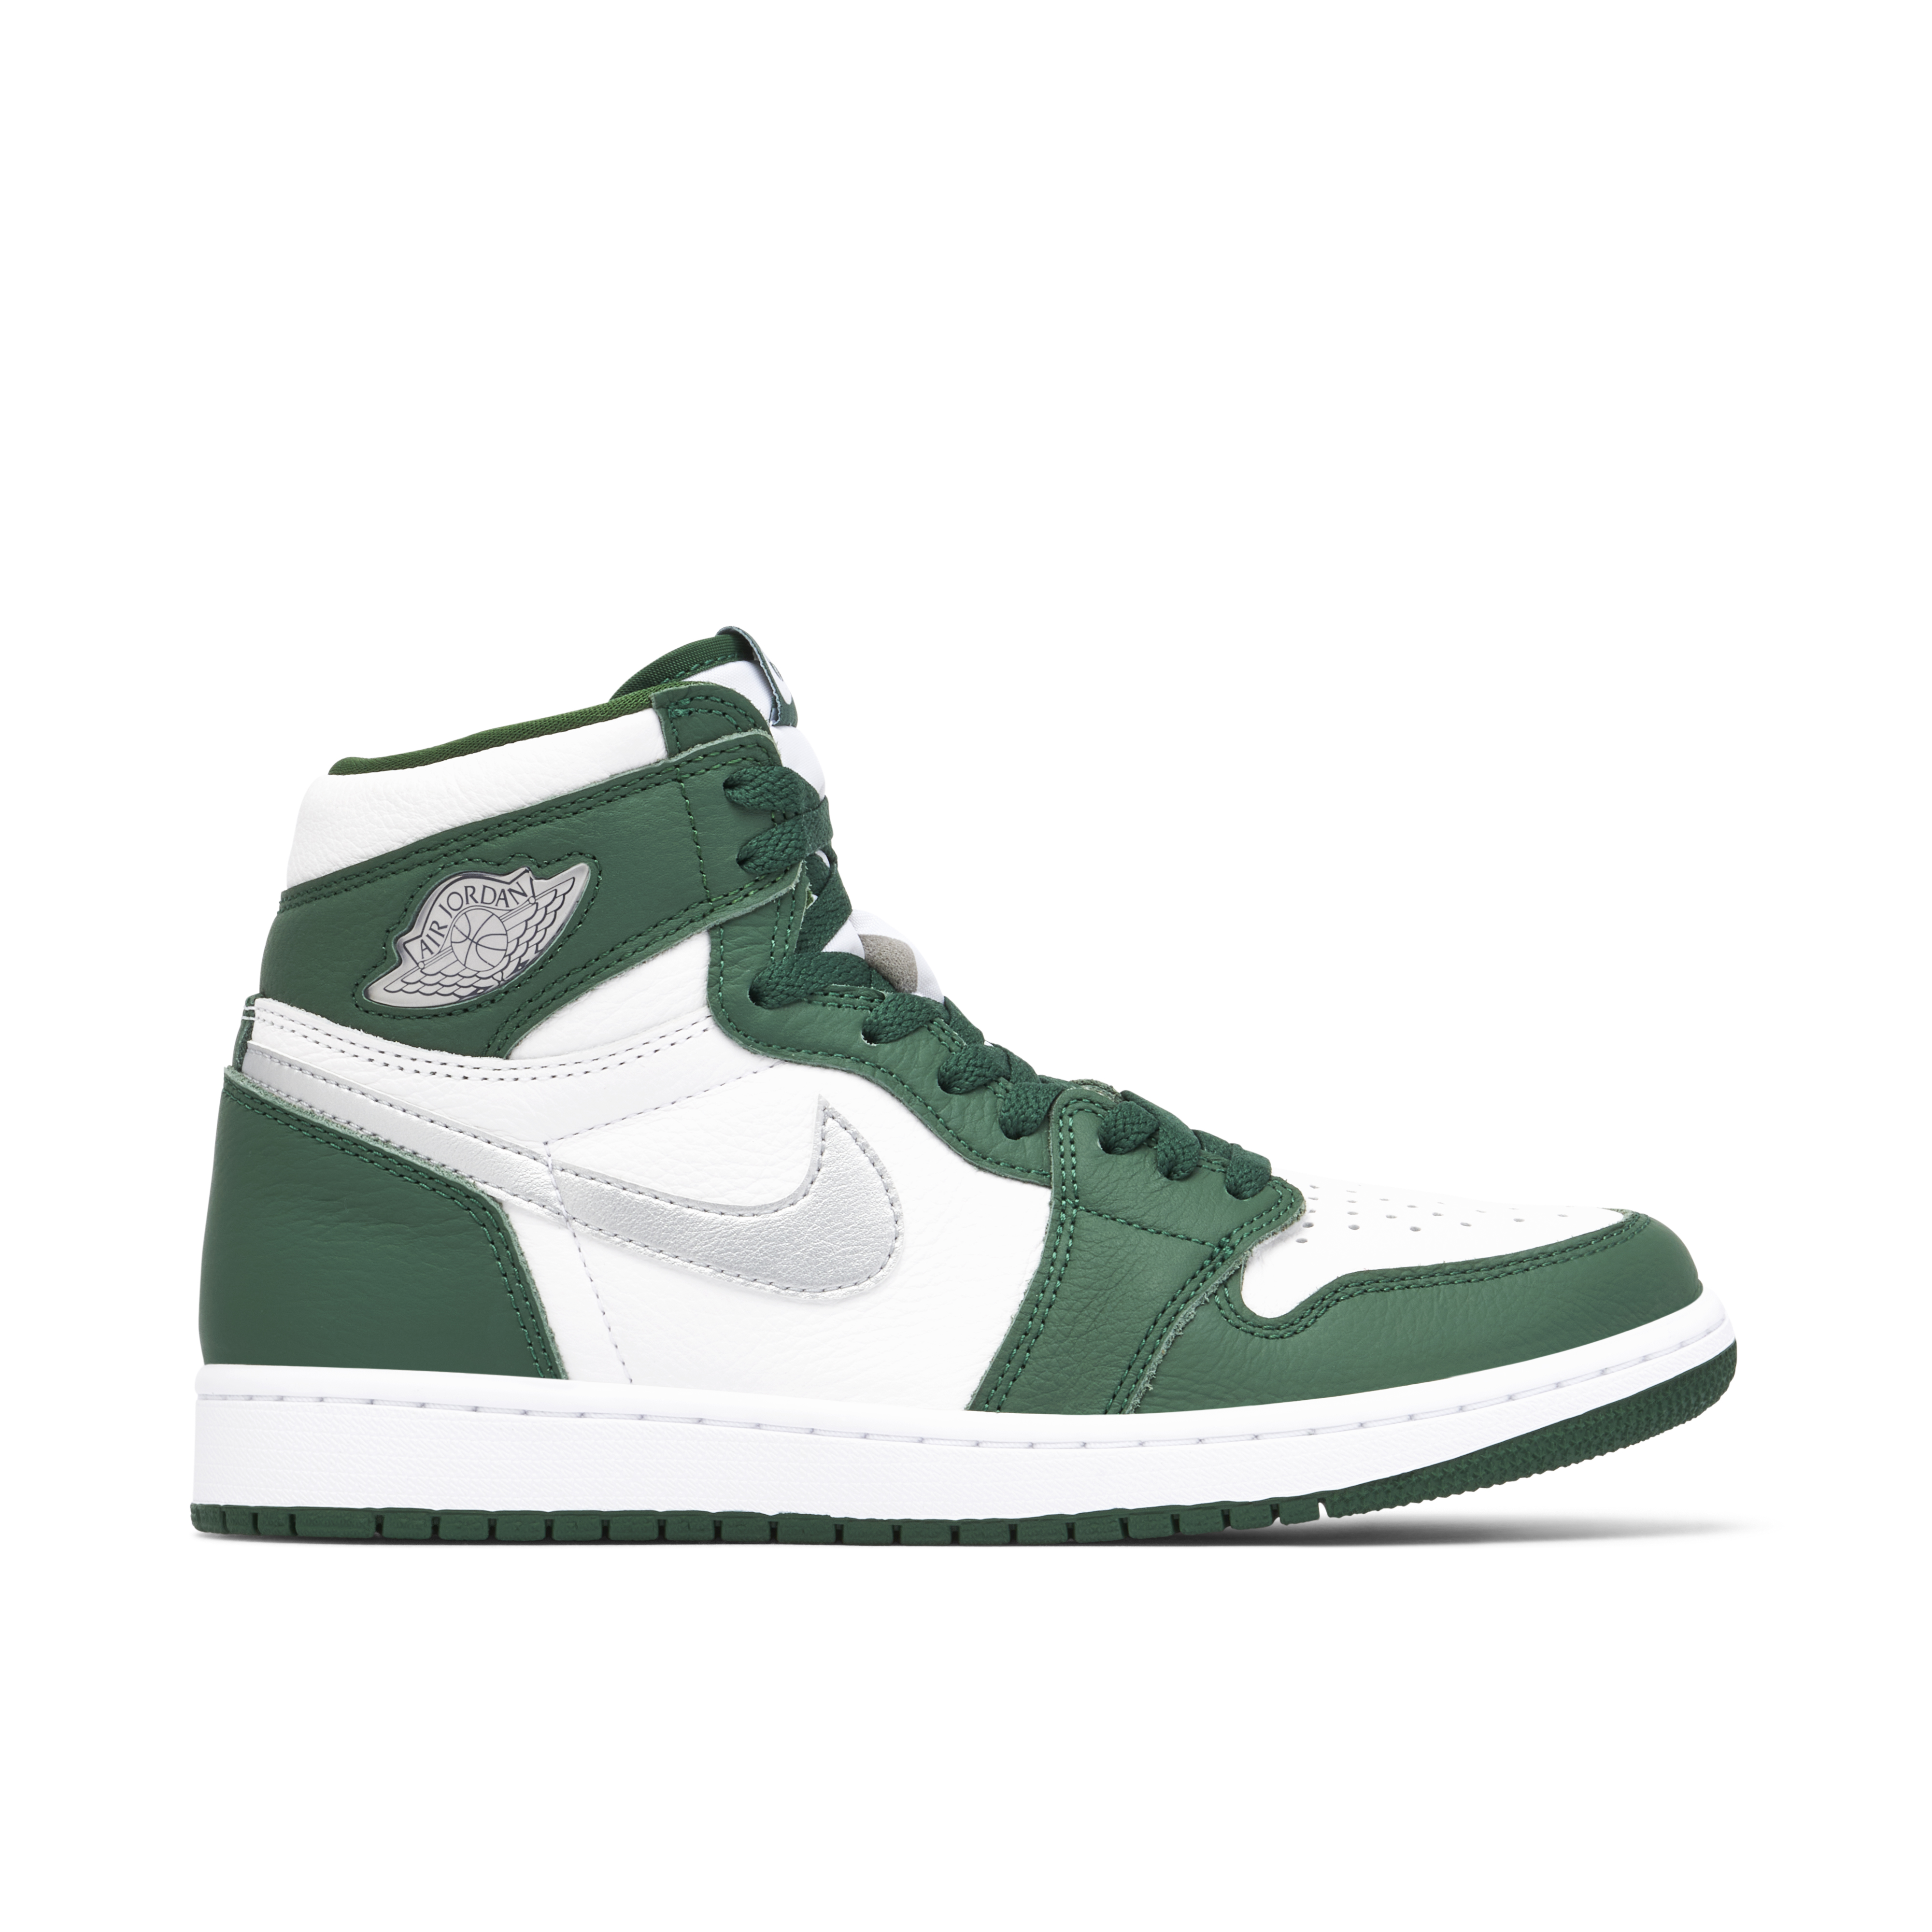 green jordan shoes